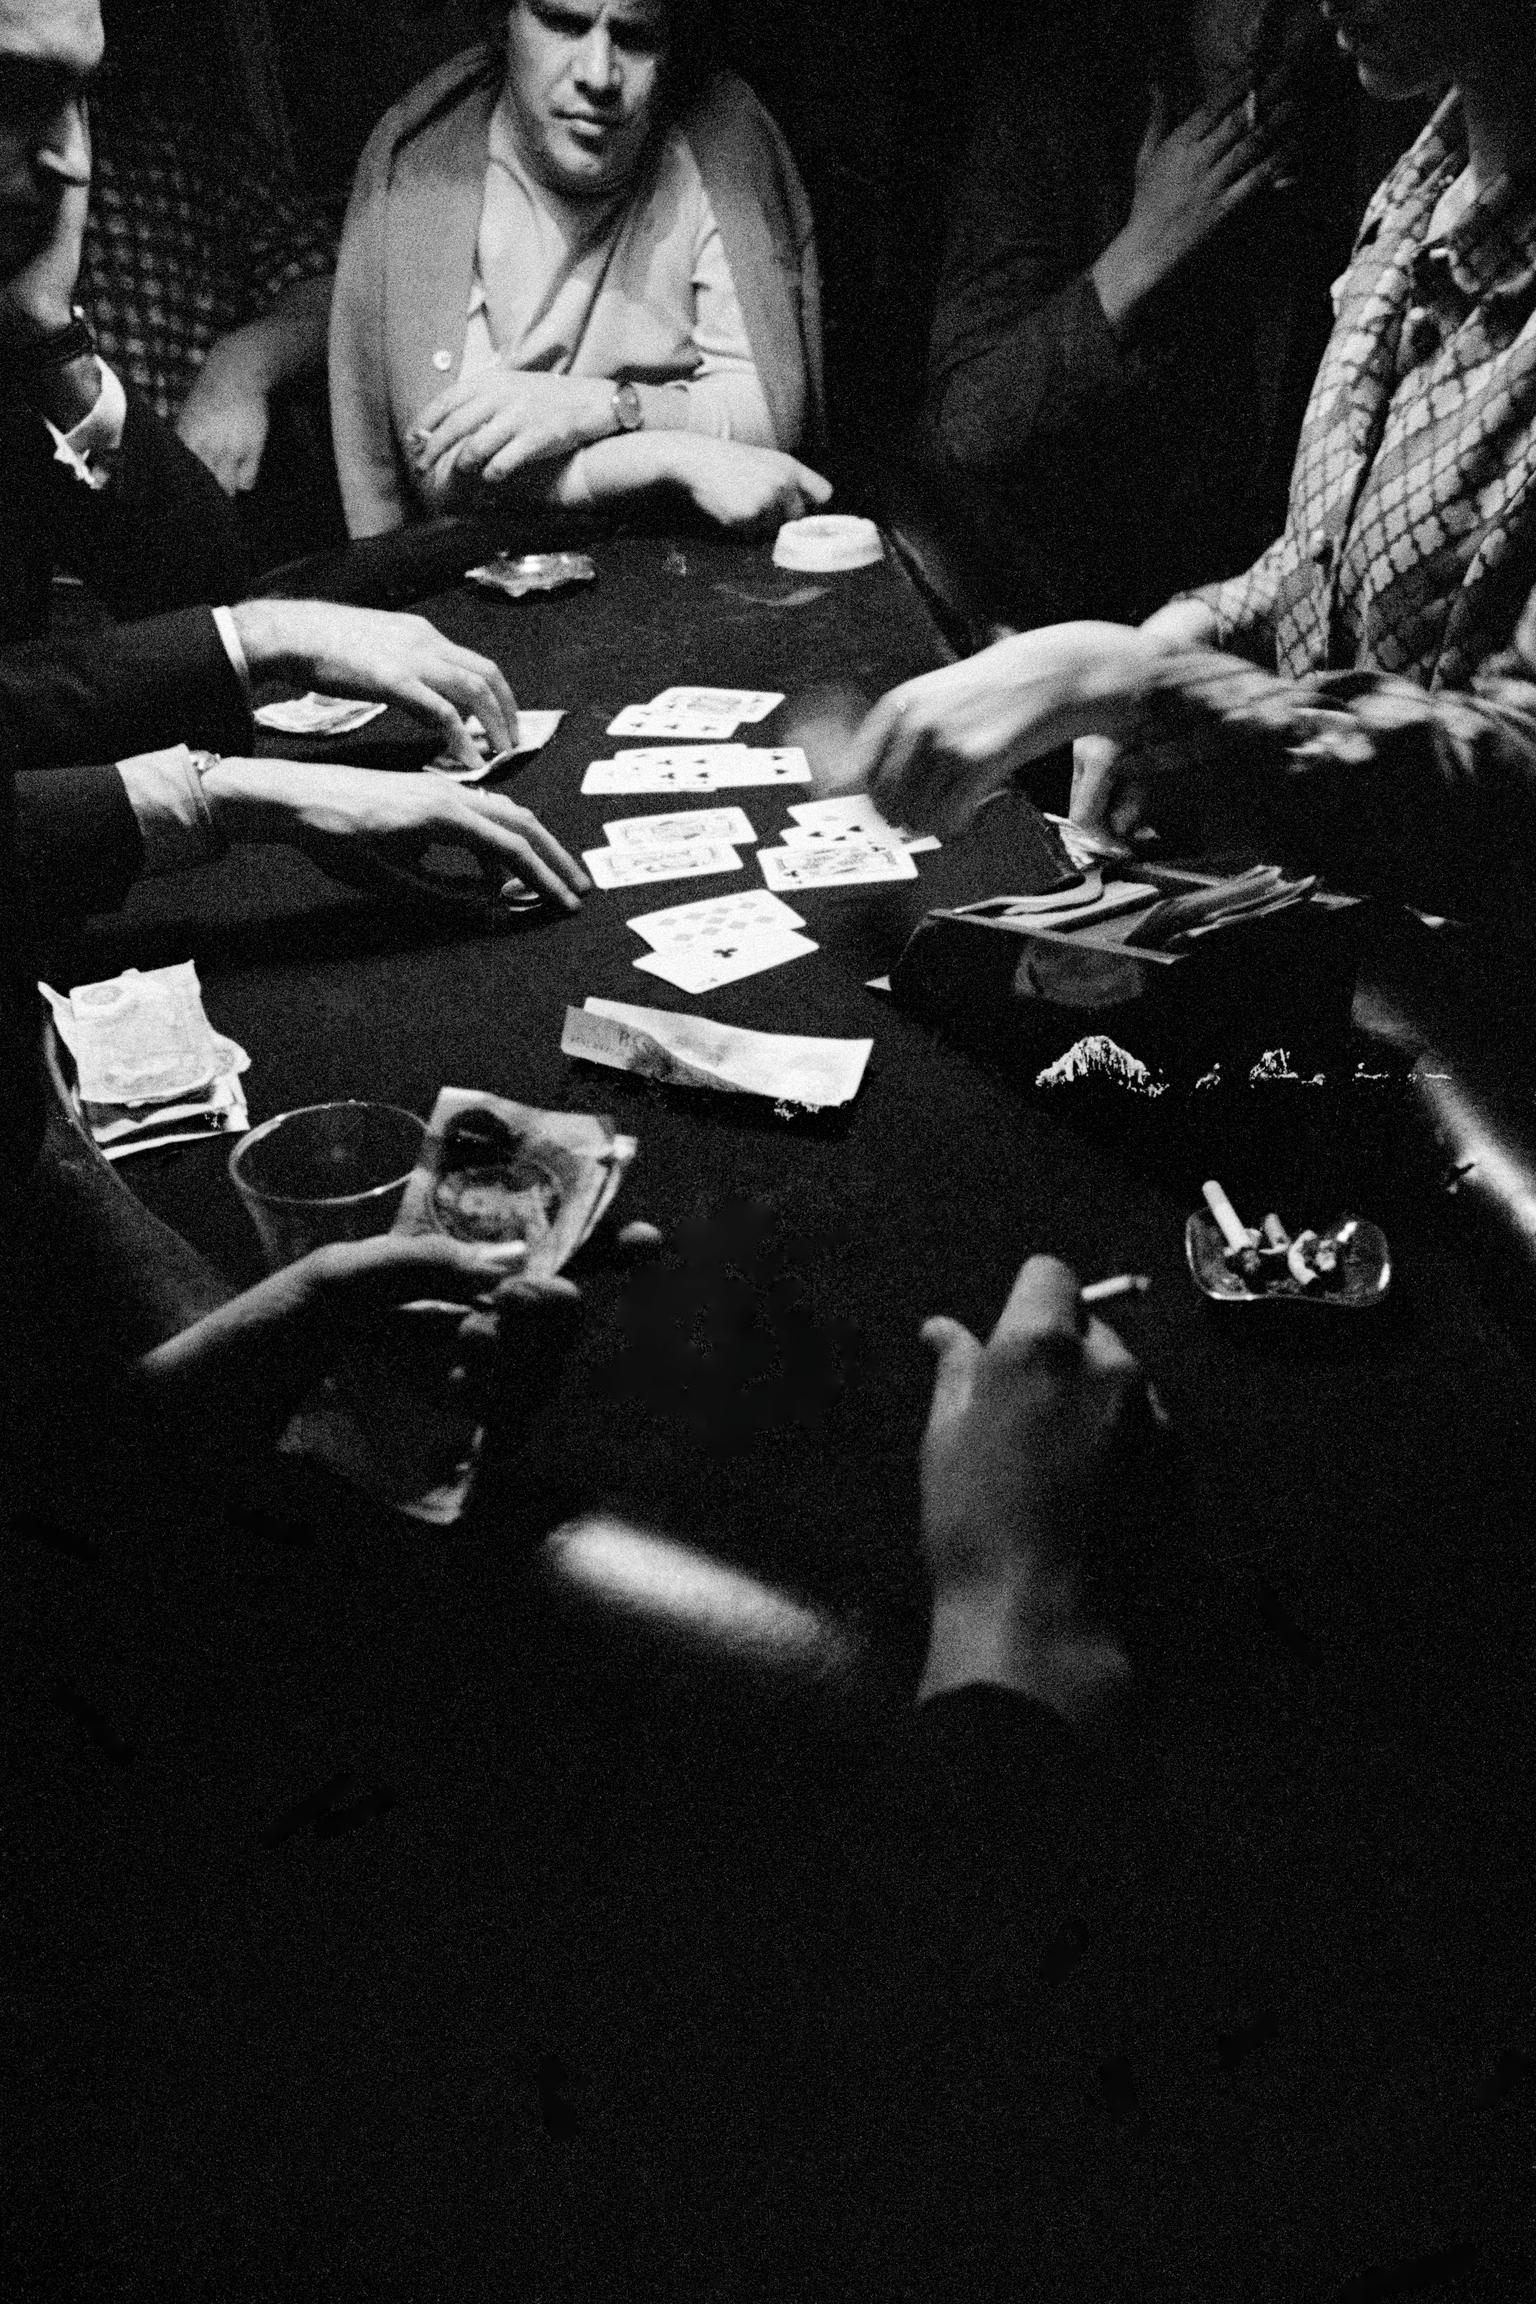 Soho gambling. London, UK